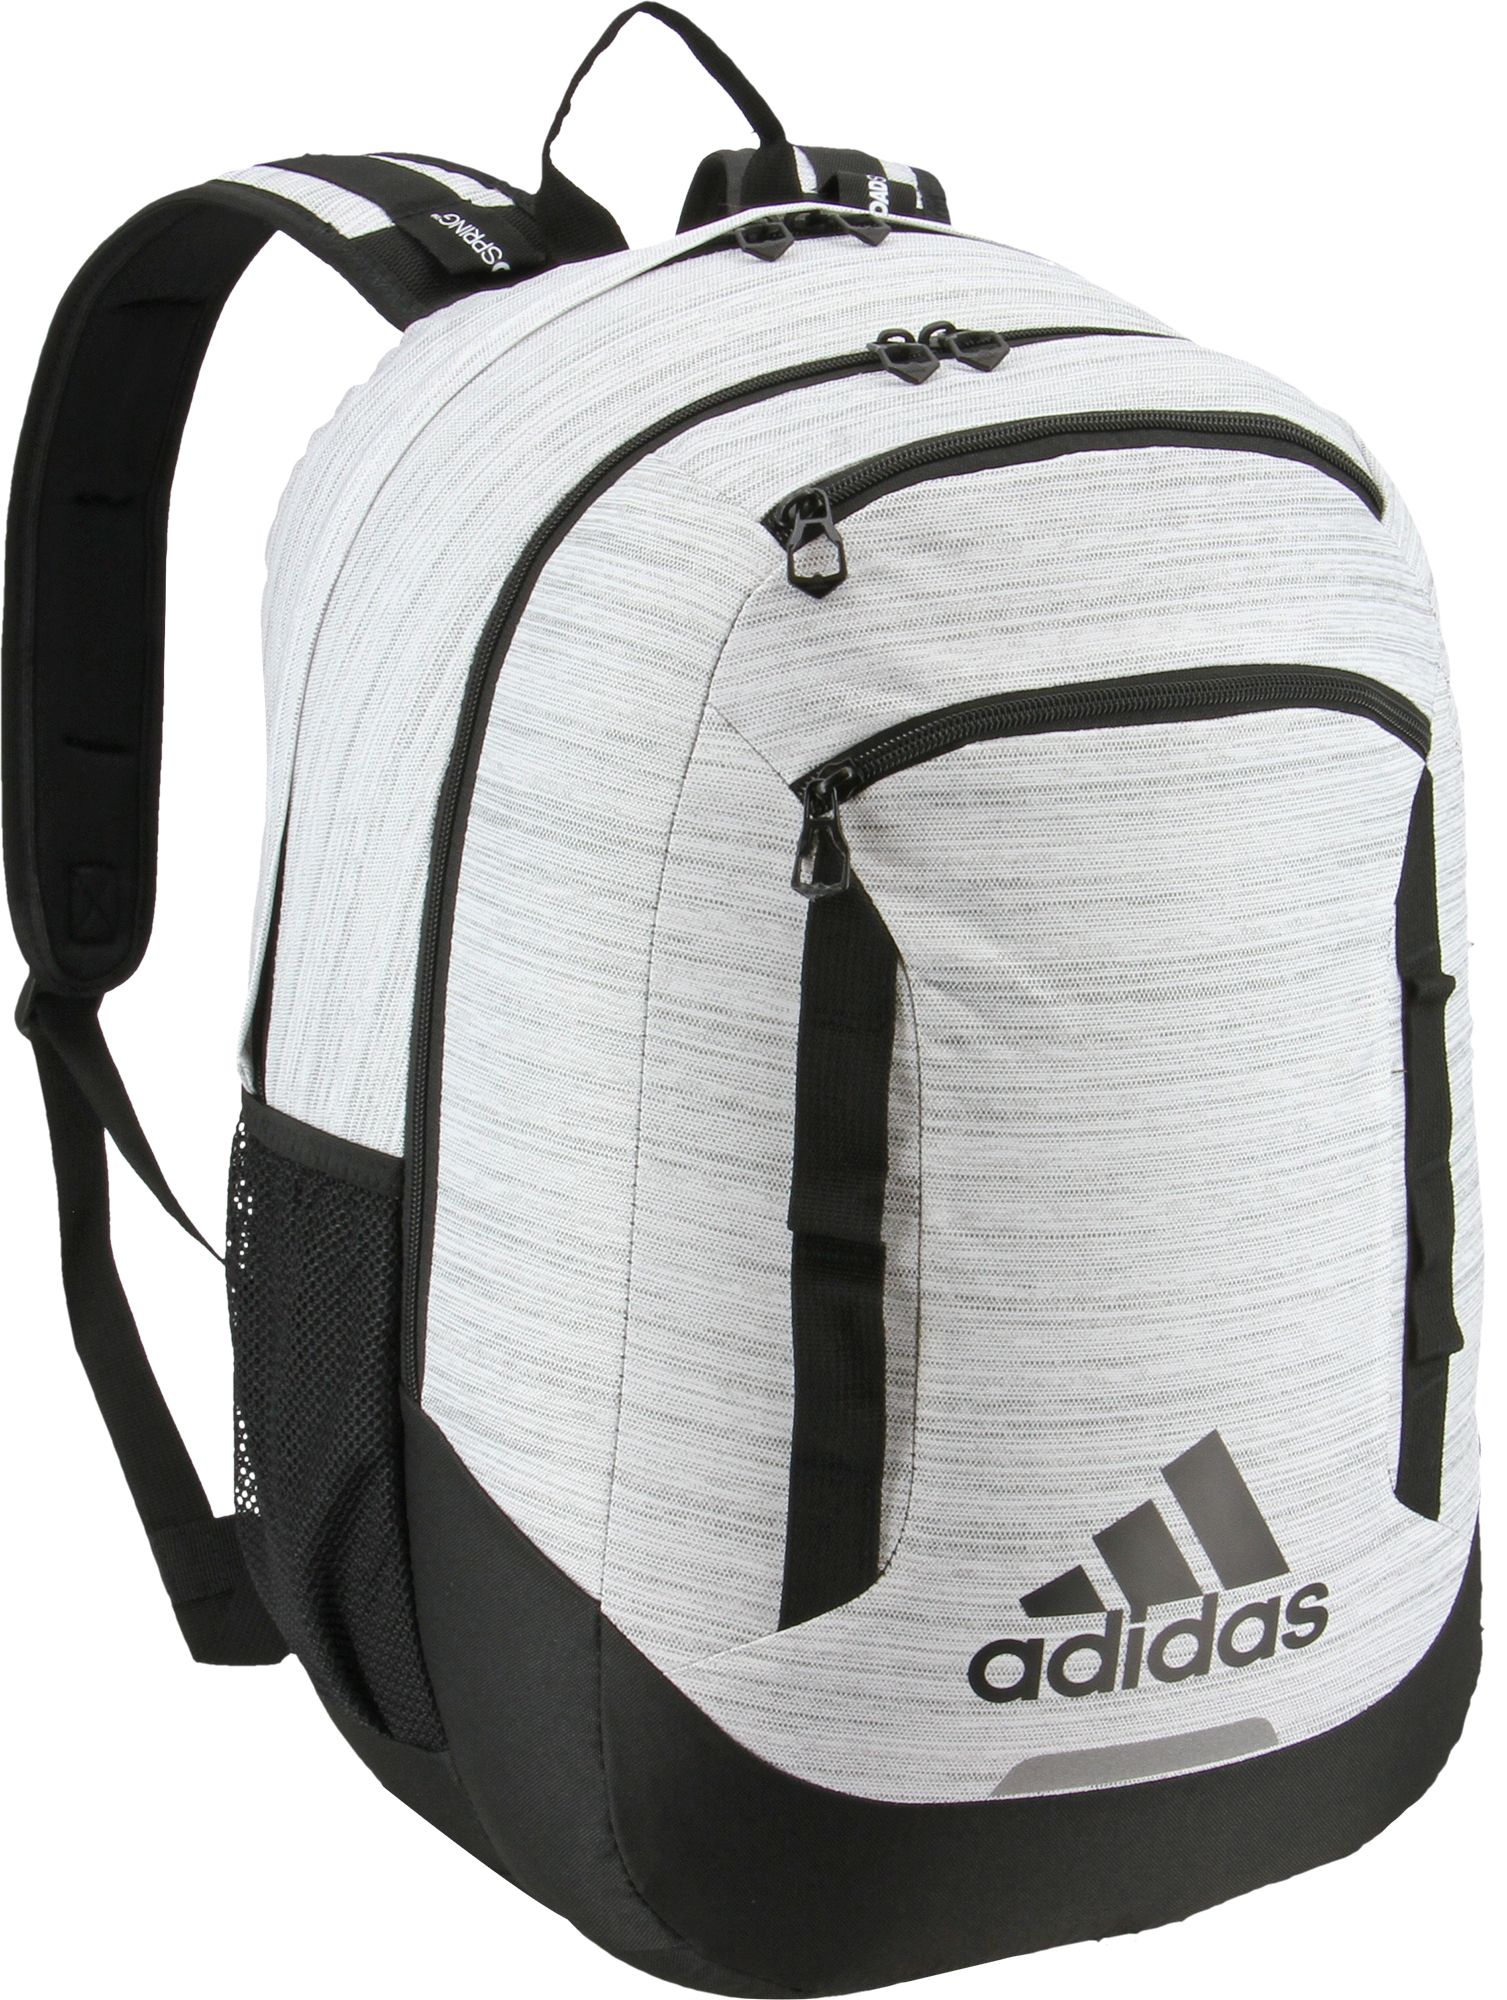 adidas bookbags for school